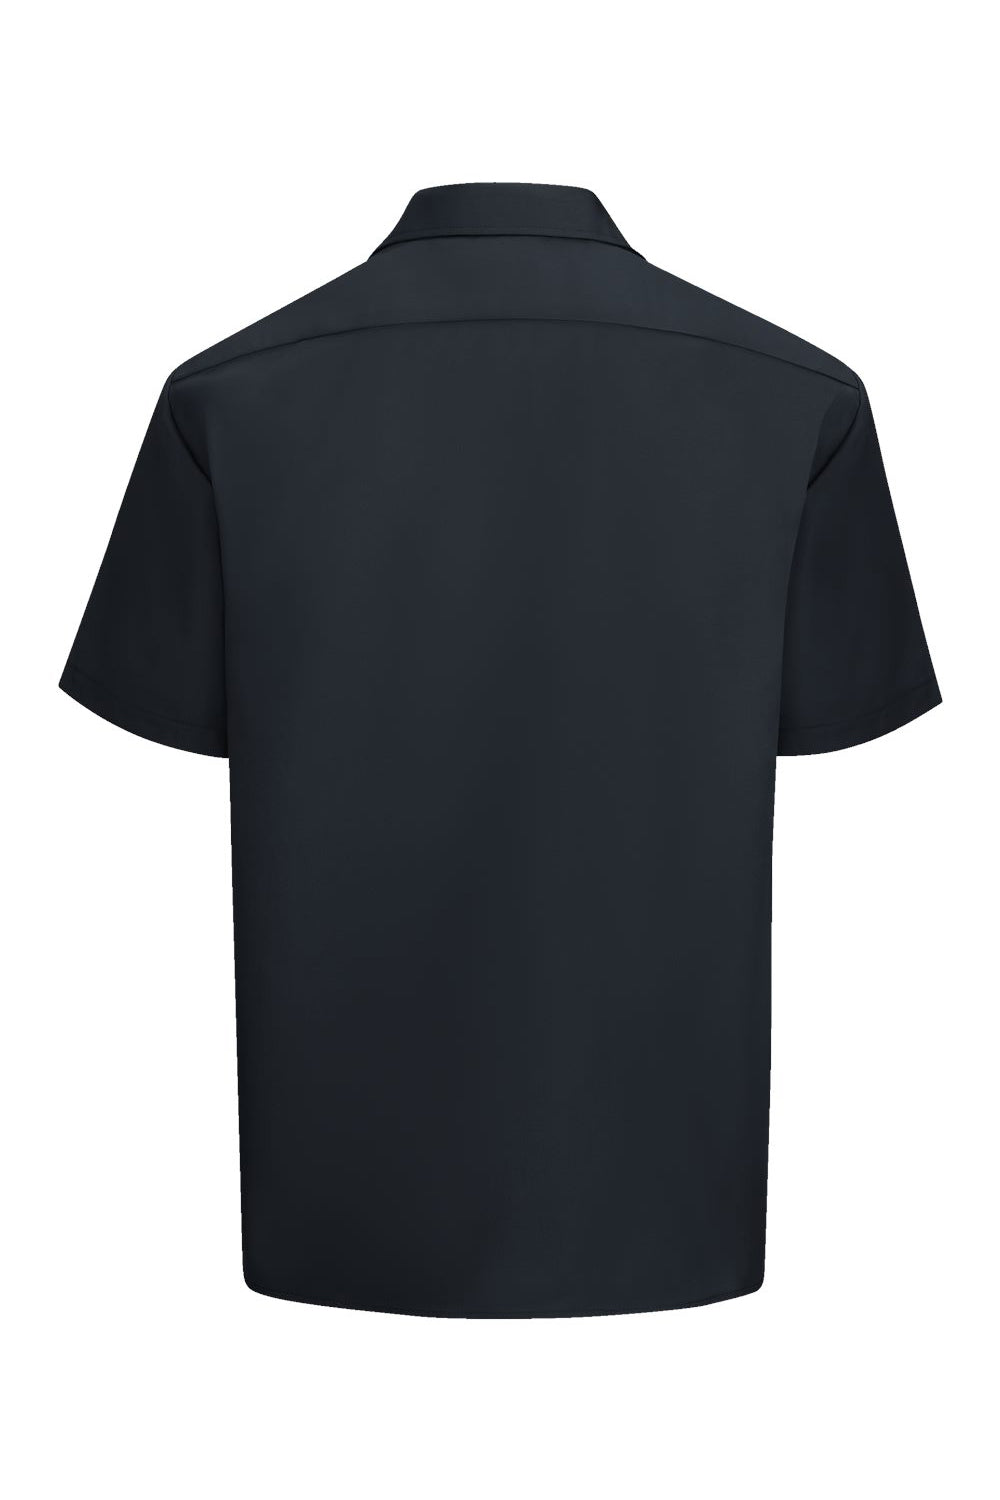 Dickies 2574 Mens Moisture Wicking Short Sleeve Button Down Work Shirt w/ Double Pockets Black Flat Back